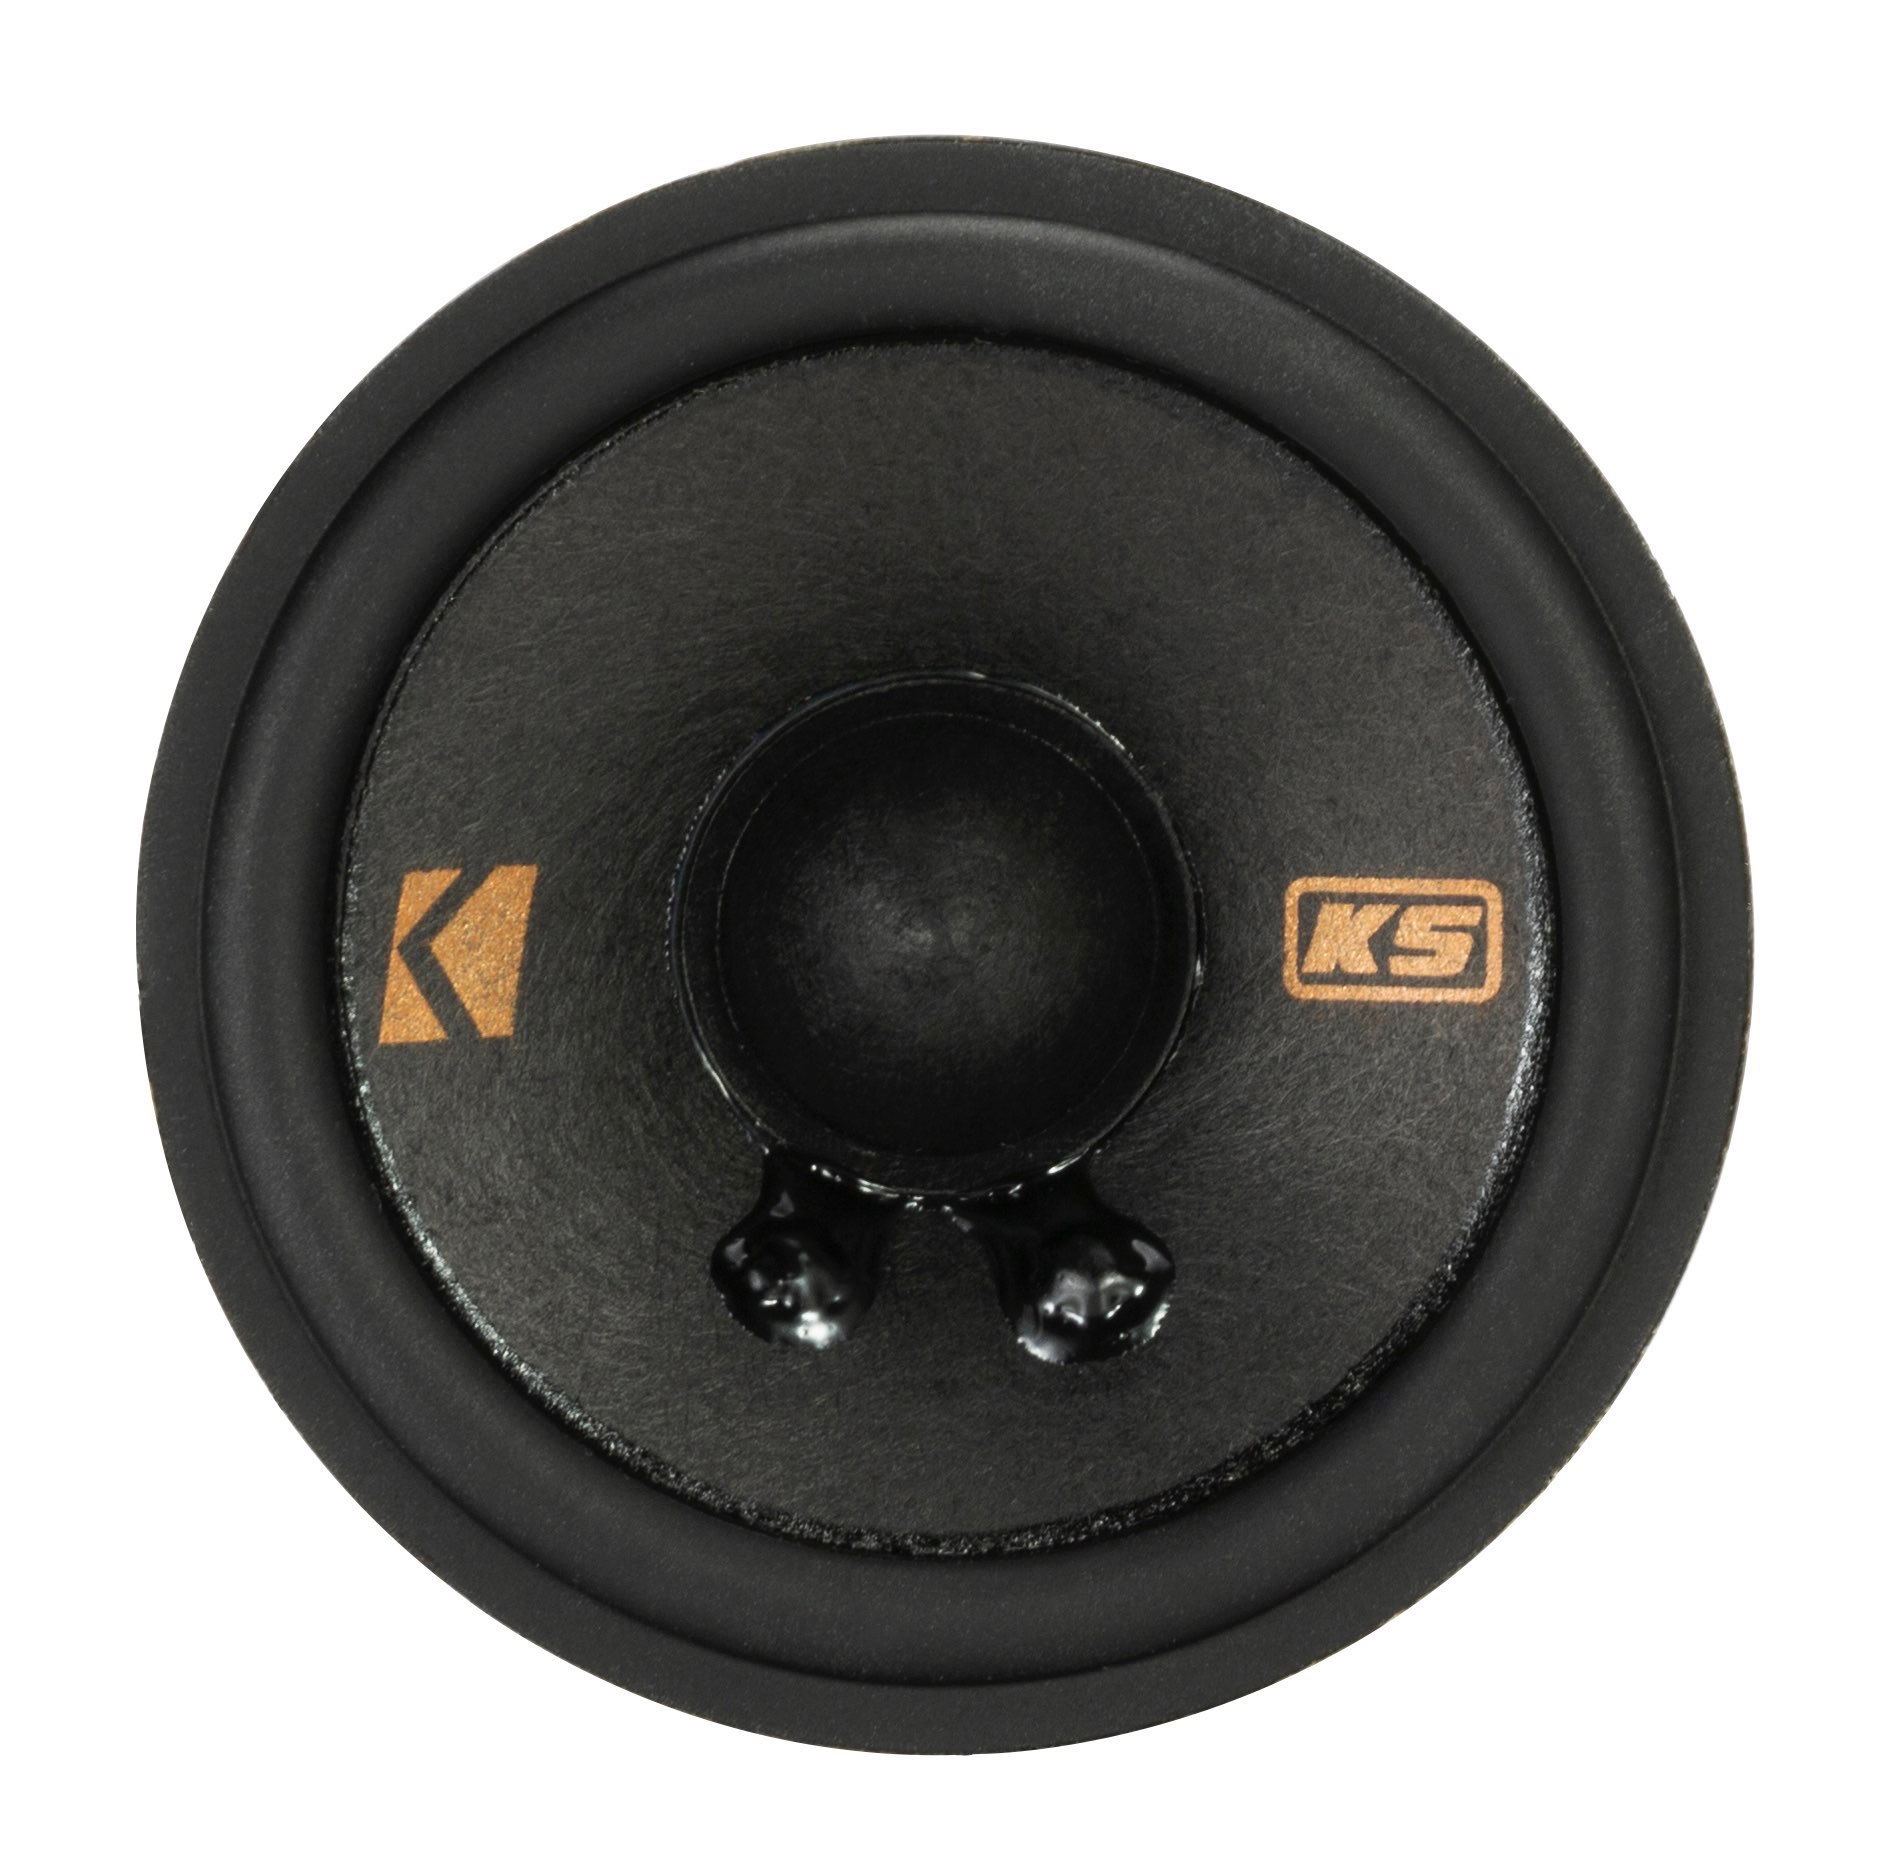 KICKER KSC2704 Breitband Lautsprecher 7cm passend für GM / Chrysler / Subaru / Jeep / Toyota KSC270 